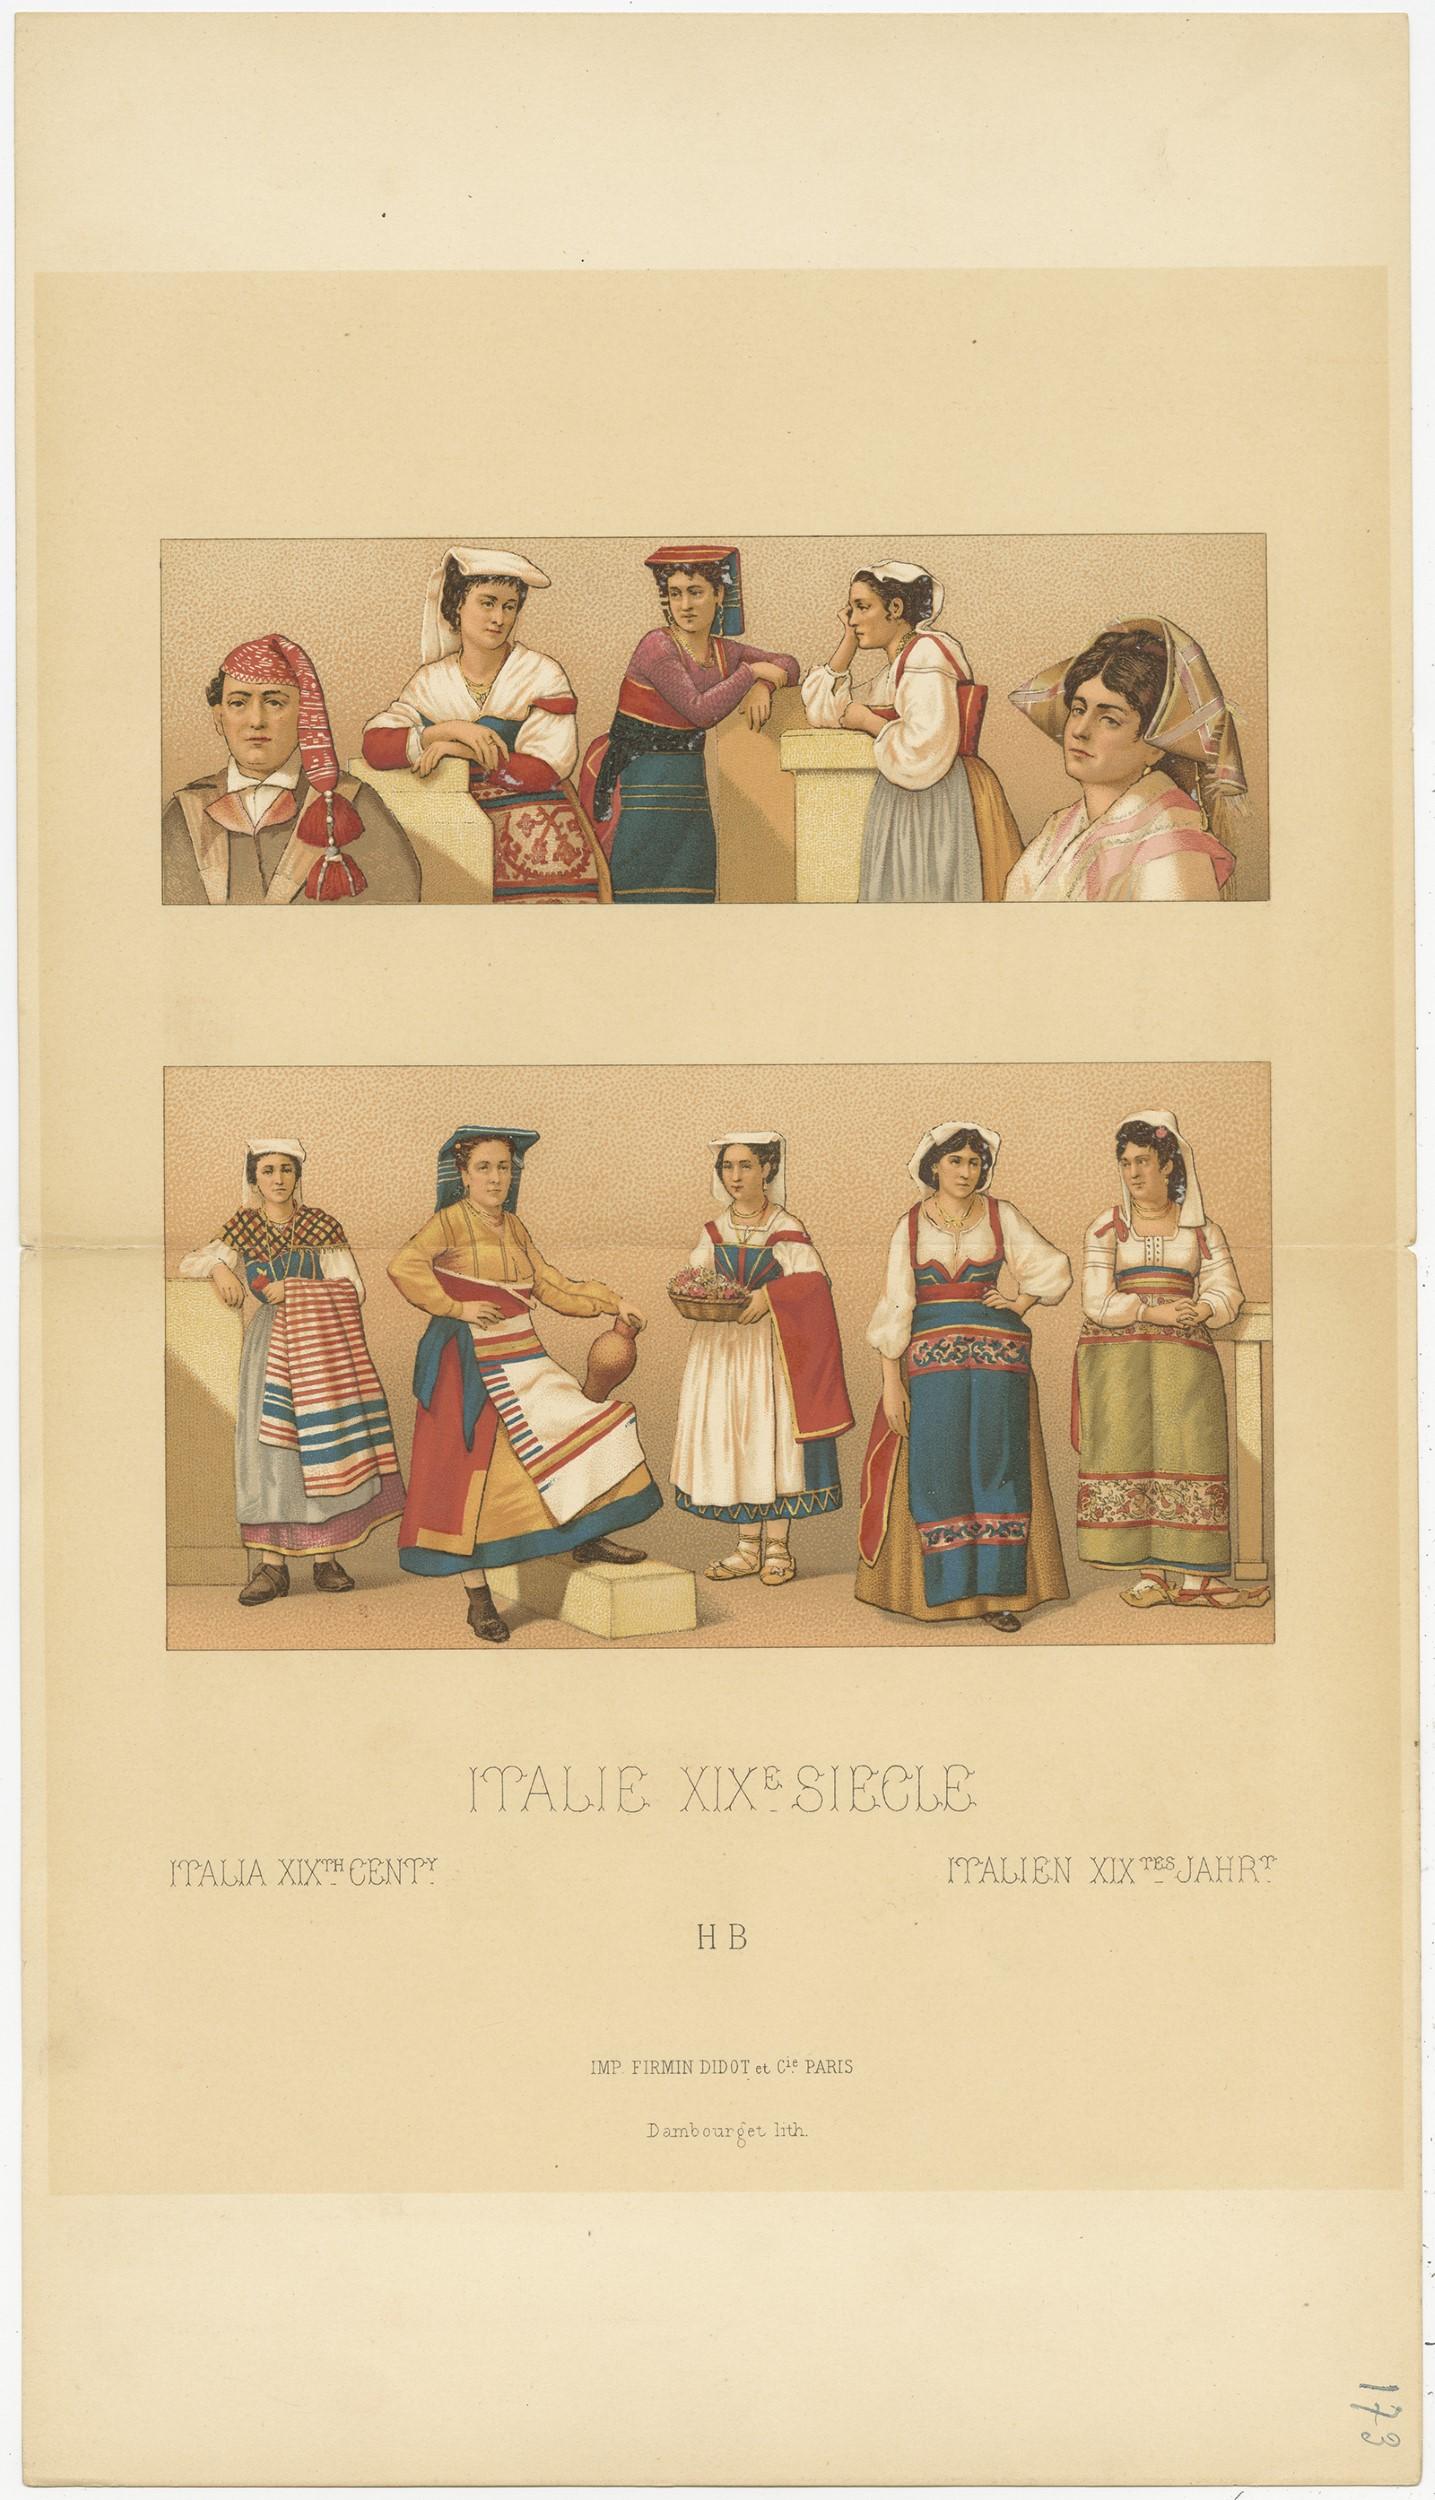 Antique print titled 'Italia XIXth Cent - Italie XIXe Siecle - Italien XIXtes Jahr'. Chromolithograph of Italian clothing. This print originates from 'Le Costume Historique' by M.A. Racinet. Published, circa 1880.

   